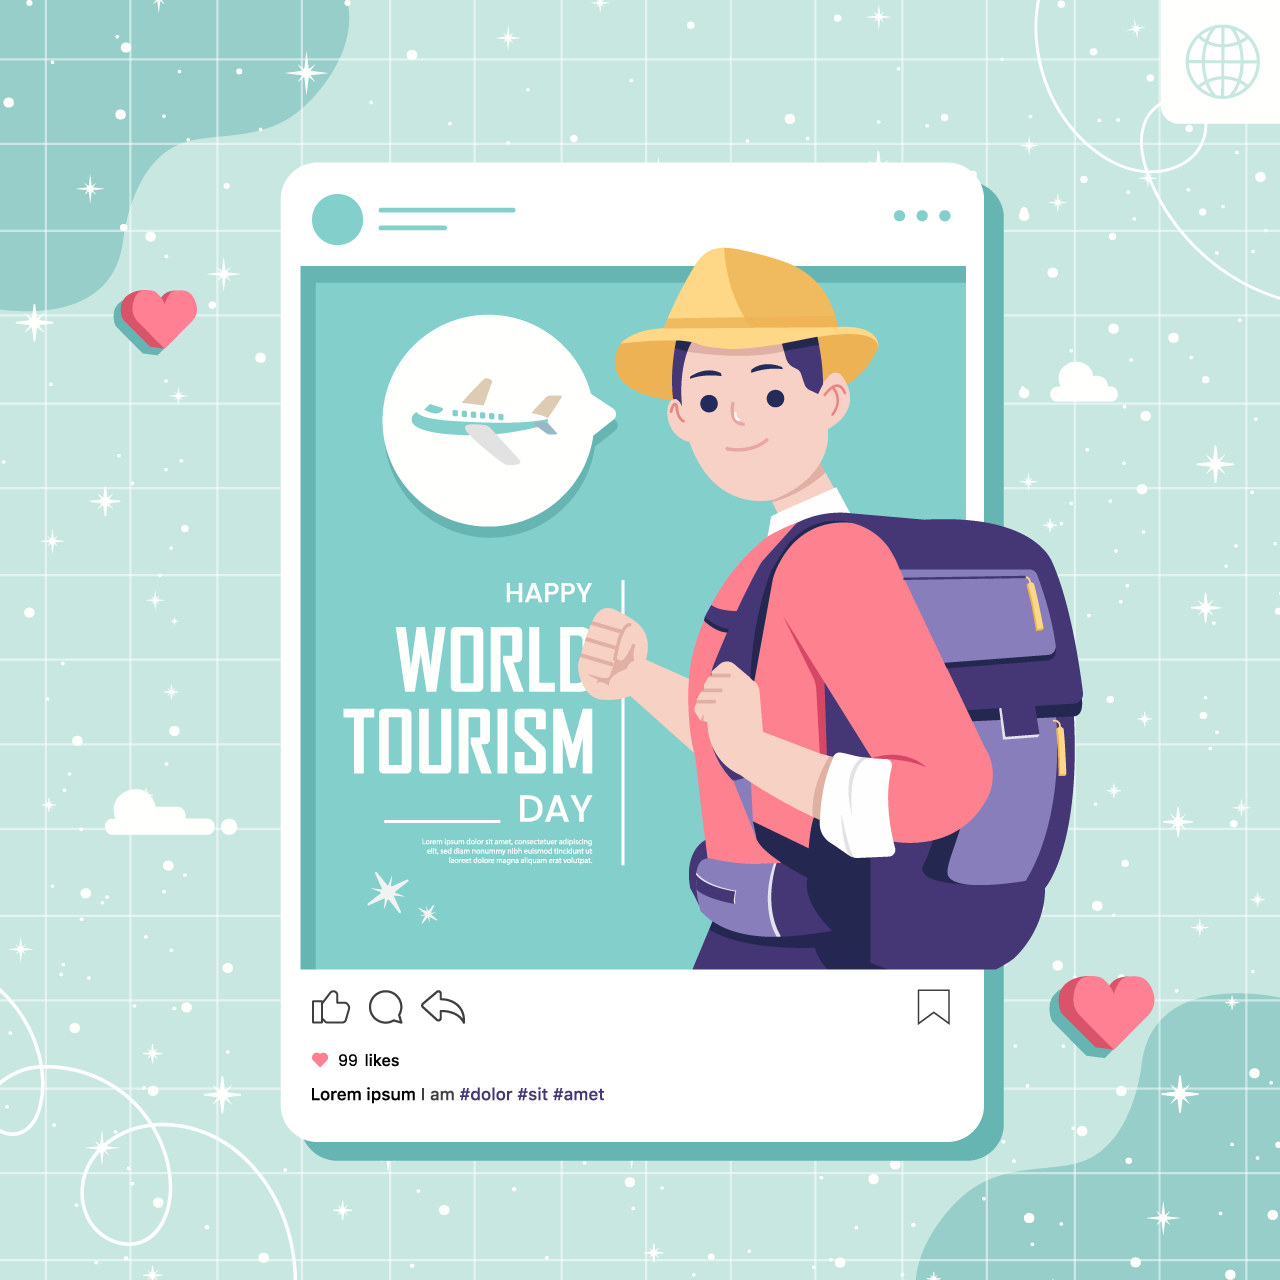 World tourism day aeroplane